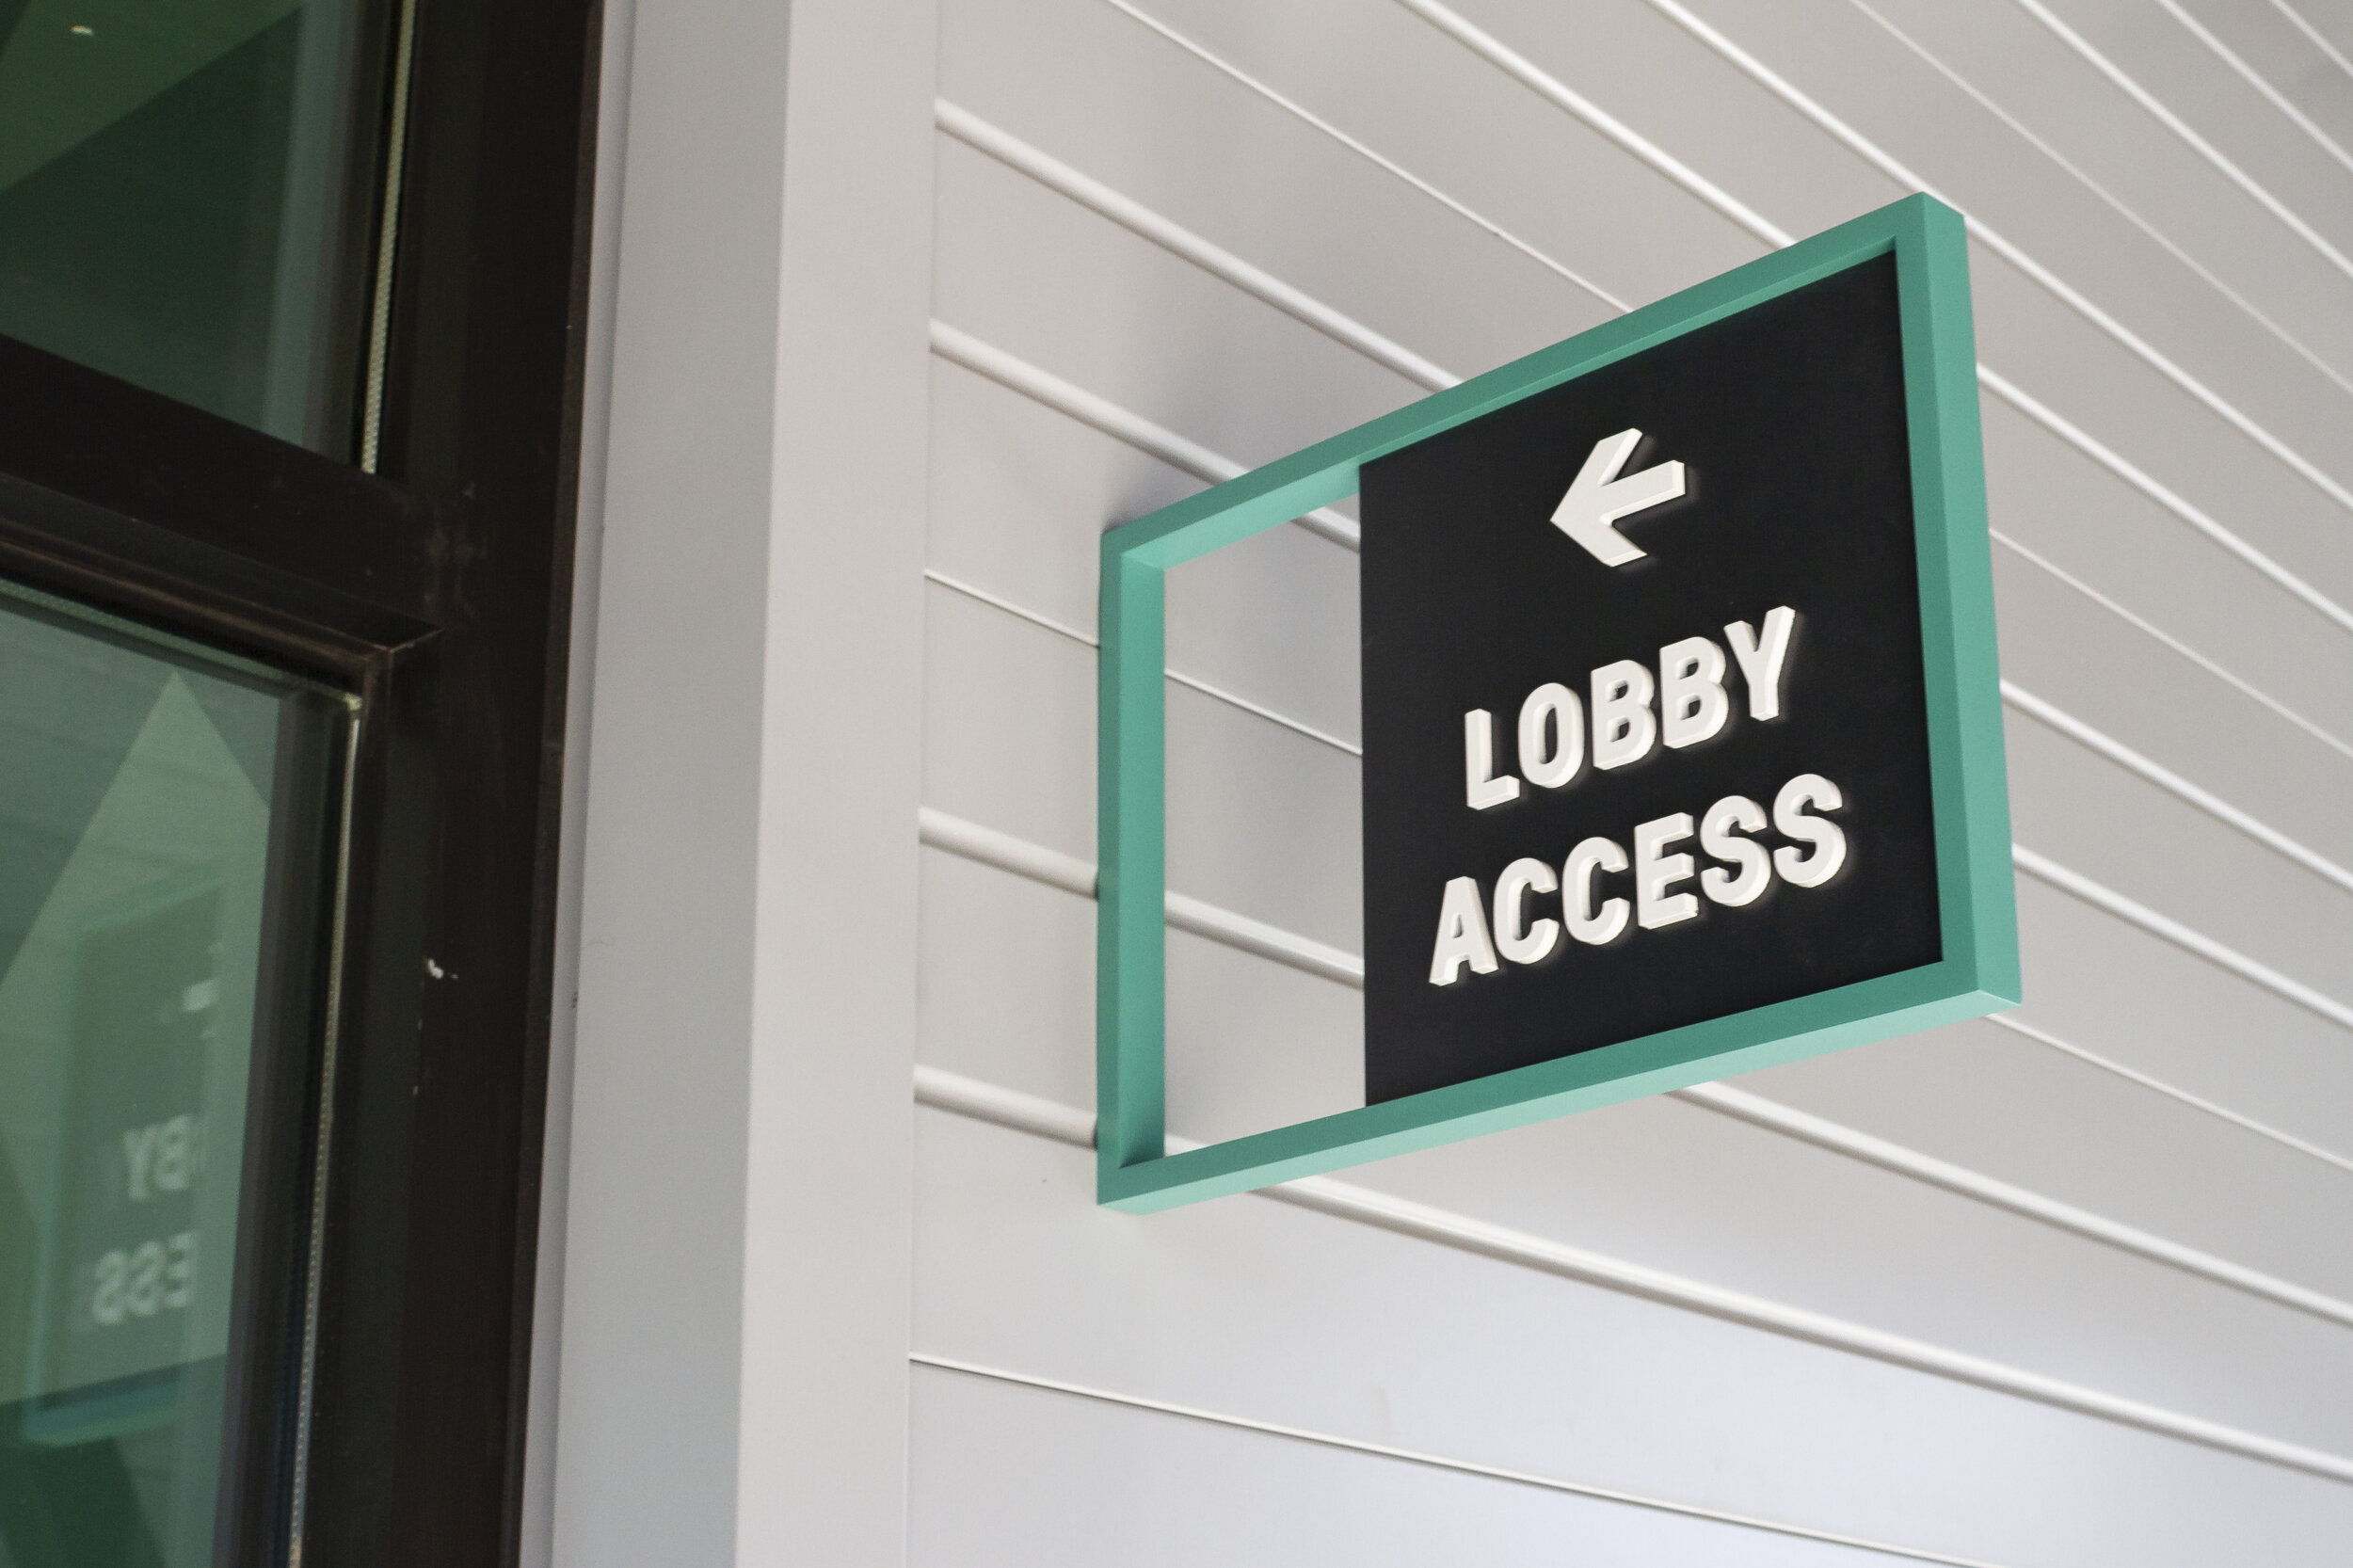 Eastside Chamblee Lobby Access Signage